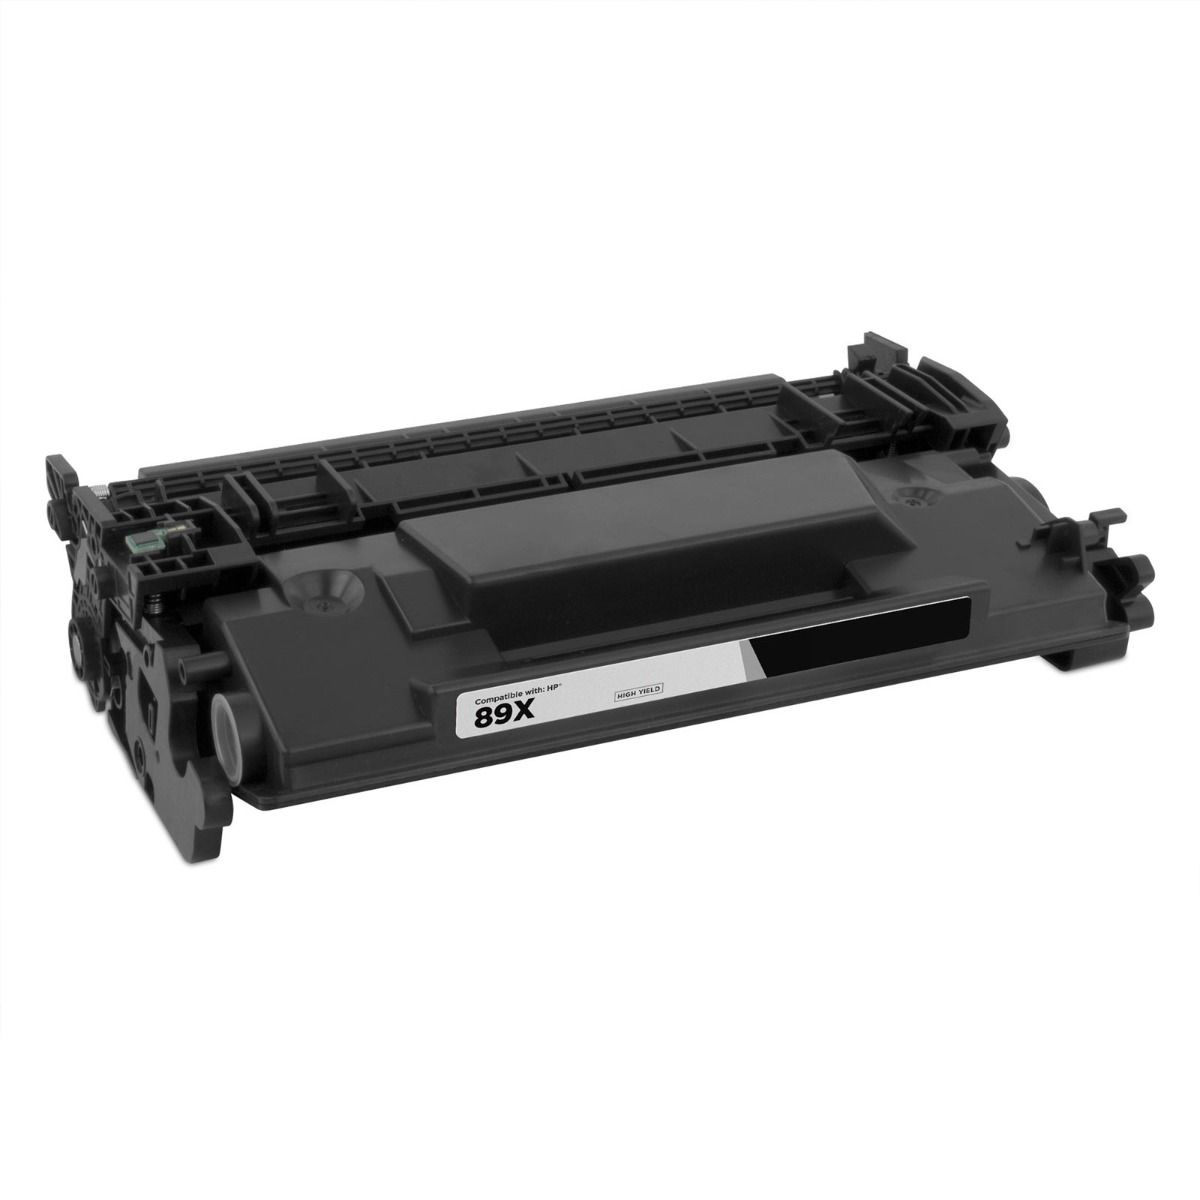 IMPERIAL BRAND Compatible EXTRA HP 89y CF289y Black Toner Cartridge - No Chip 20,000 pages